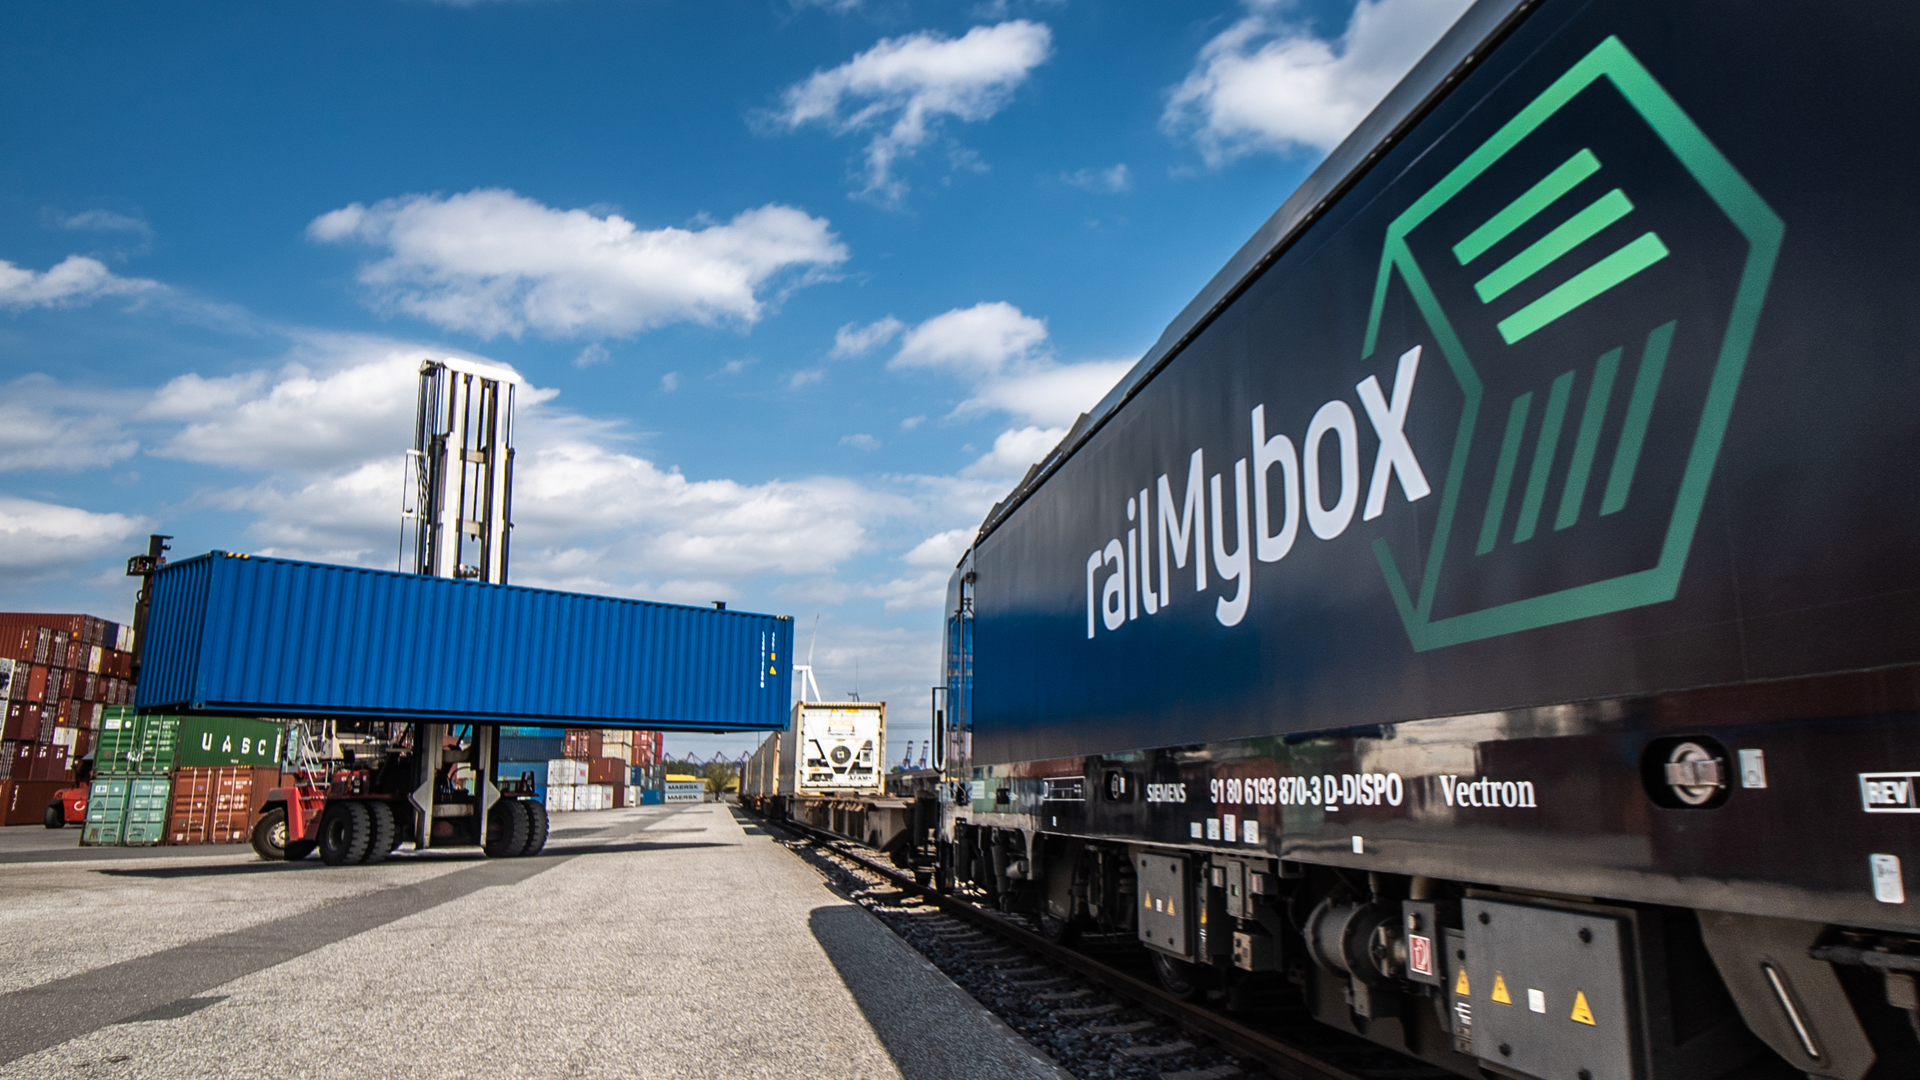 Intermodal – easy and digital with railMybox